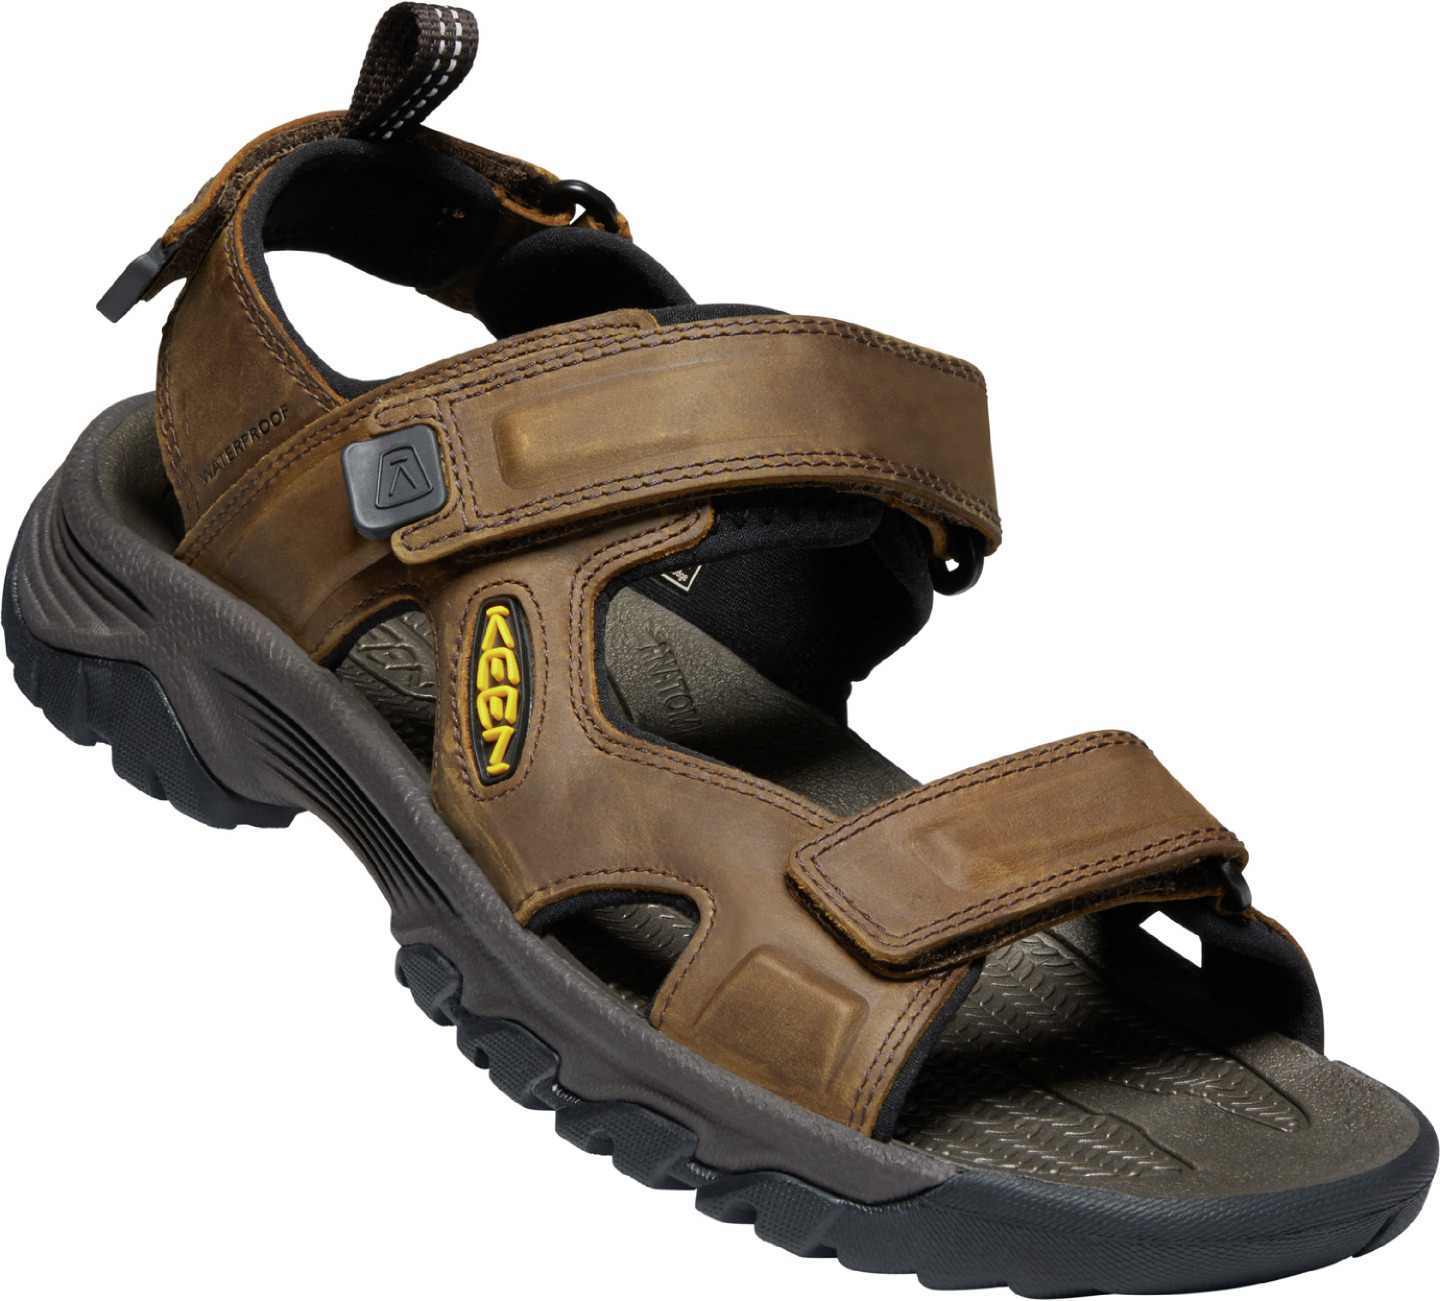 Keen pánské sandály Targhee III Open Toe Sandal Men - Bison/Mulch Barva: bison/mulch, Velikost: 10,5 UK (45 EU / 29,5 cm)